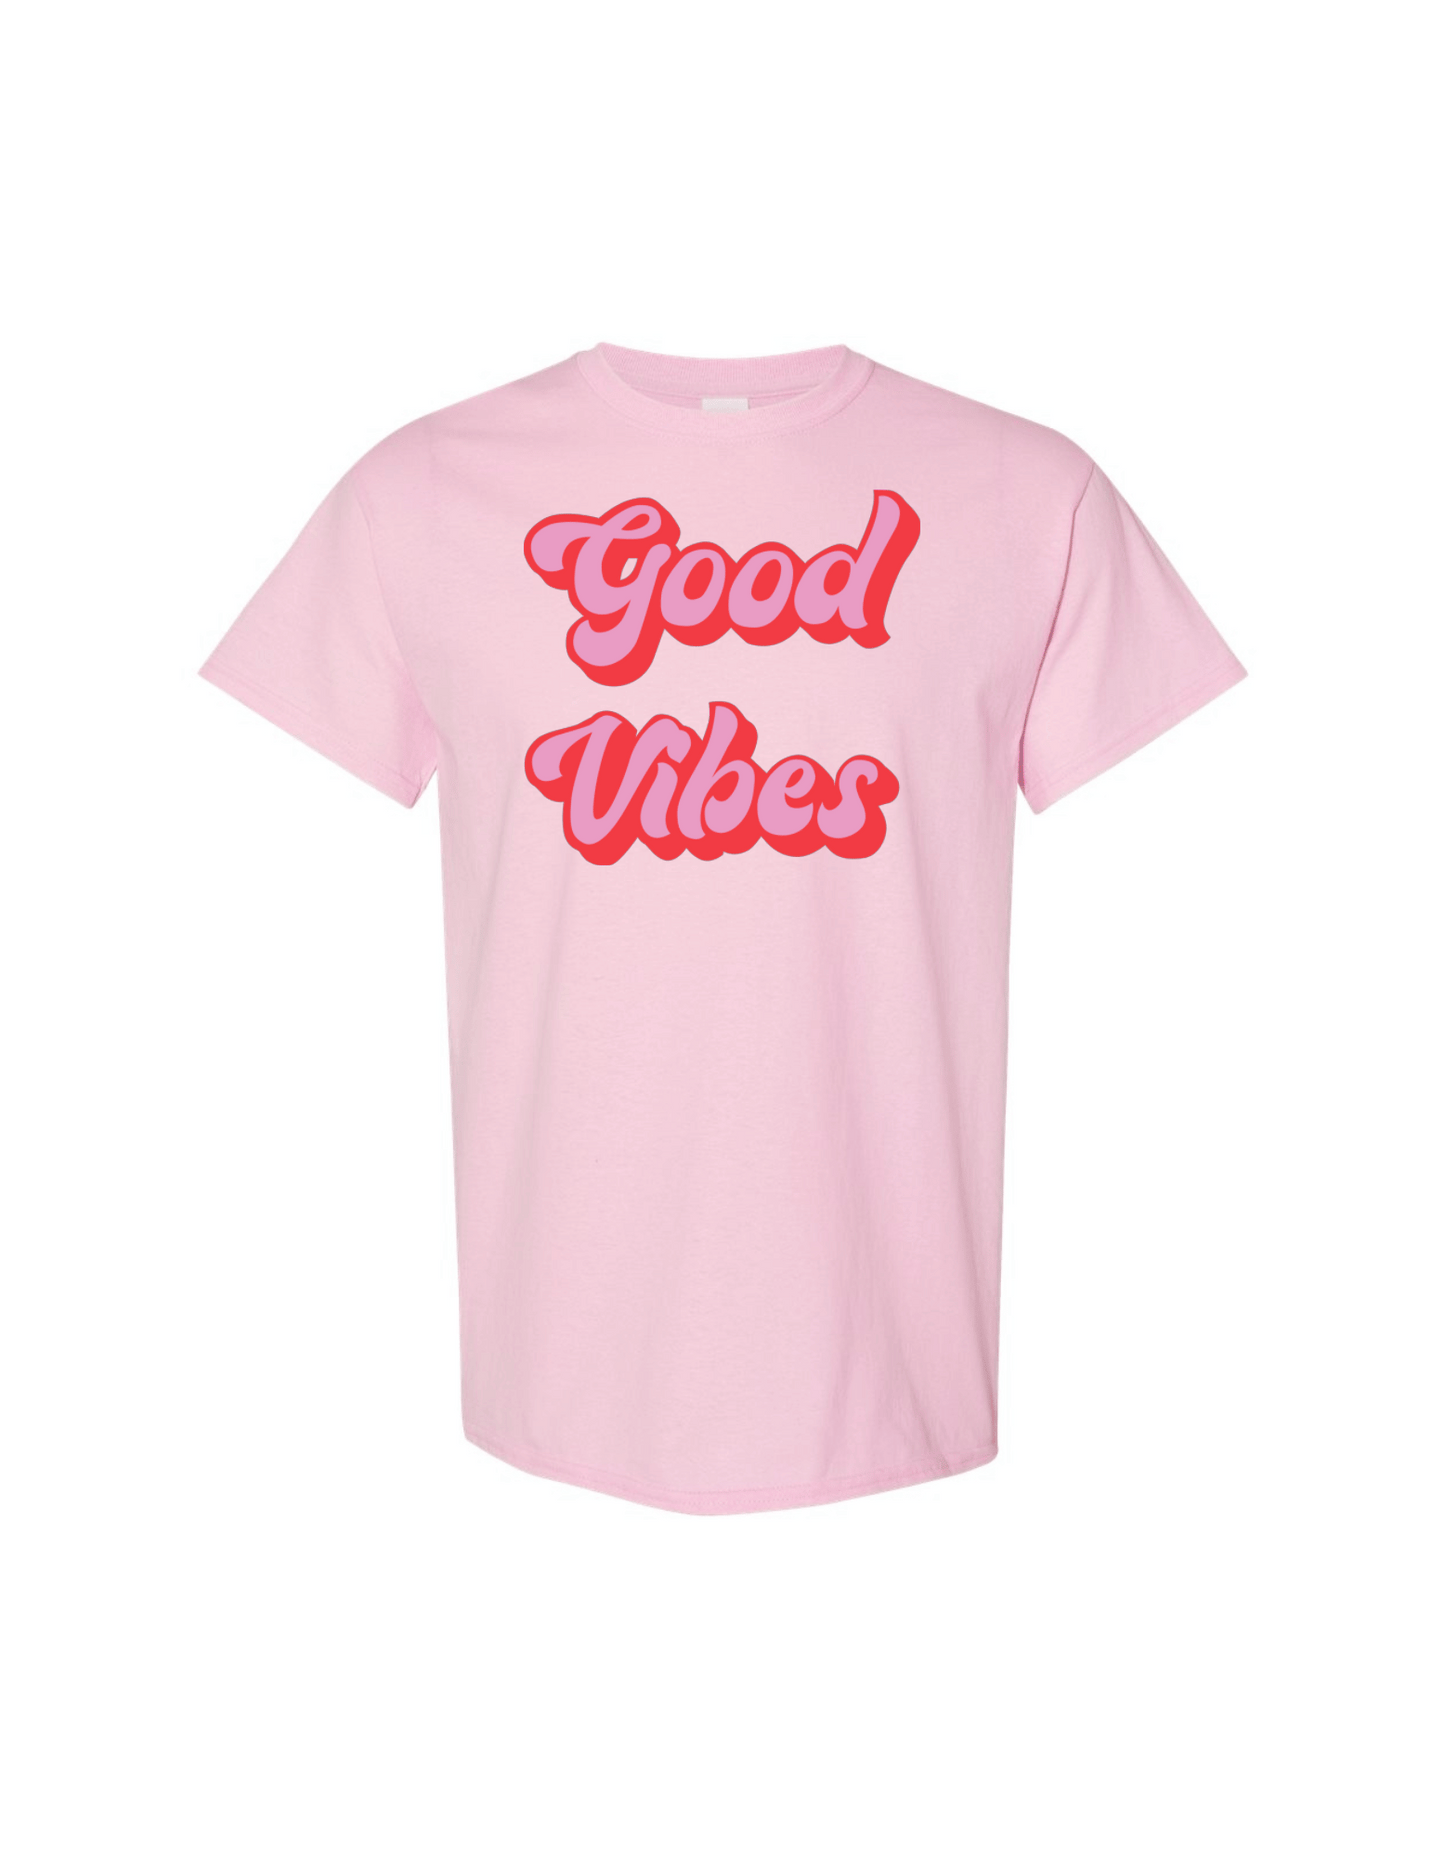 Made to Order Handmade Good Vibes Inspirational Short Sleeve Shirt